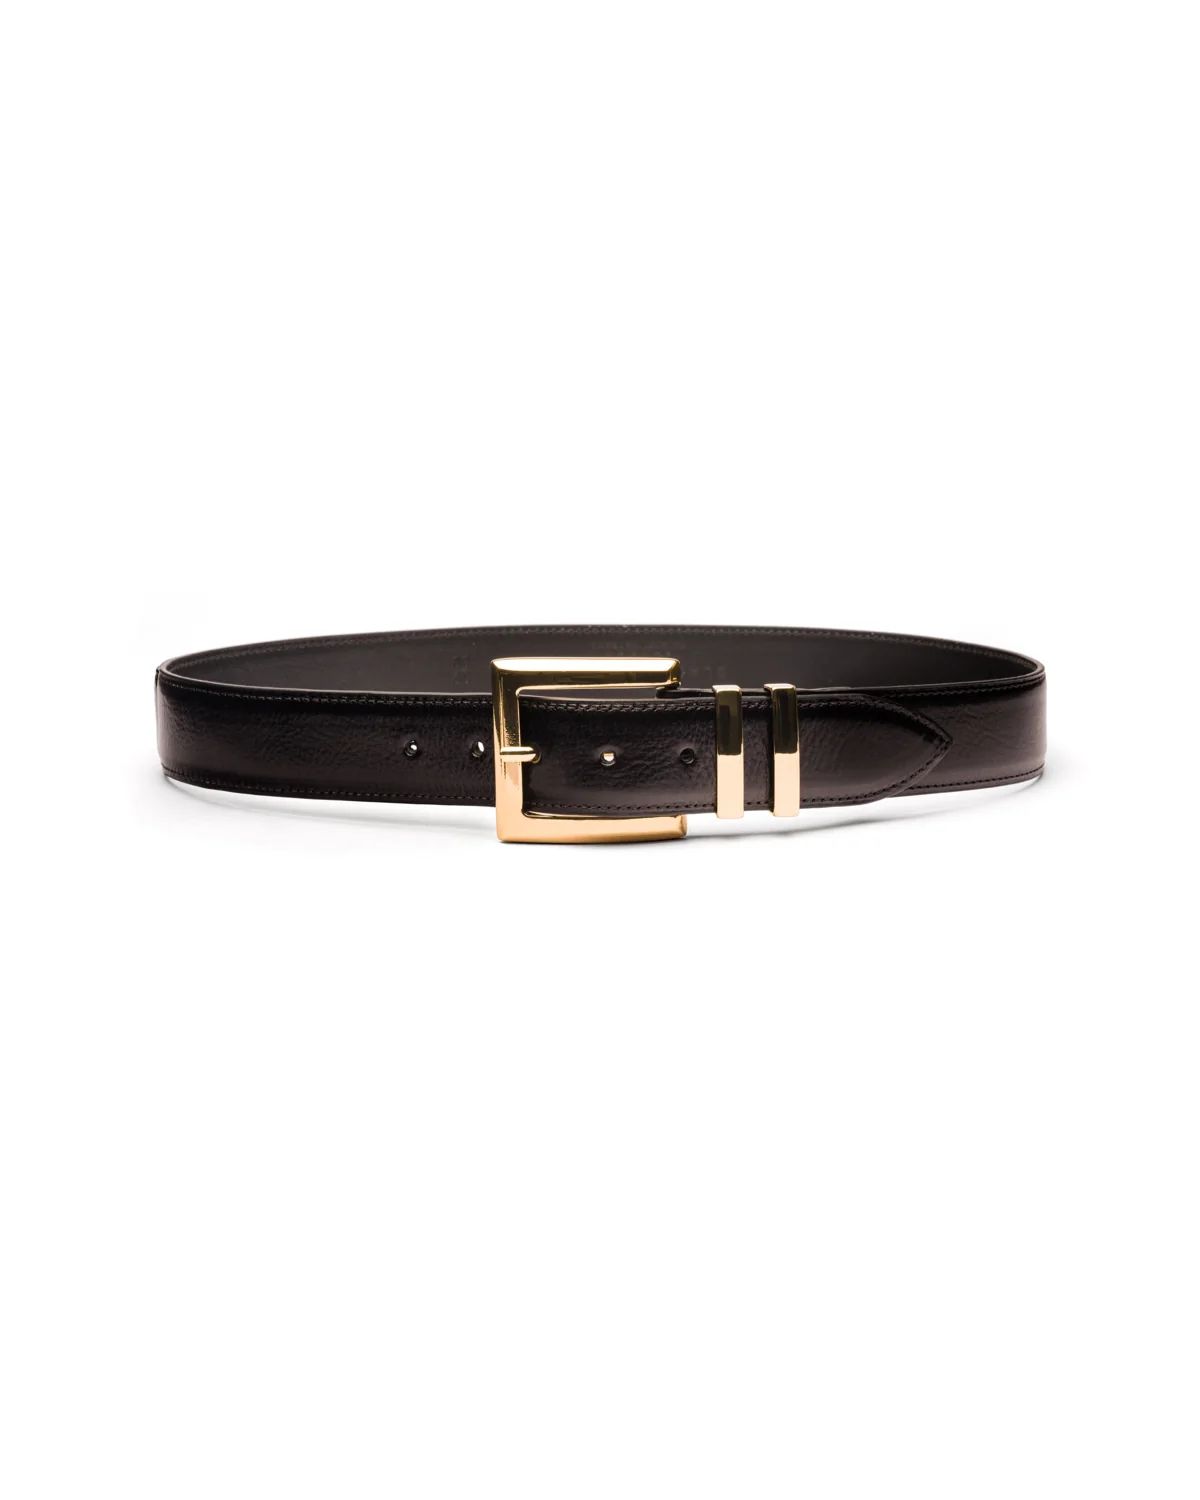 Naomi black leather waist belt | Black & Brown London